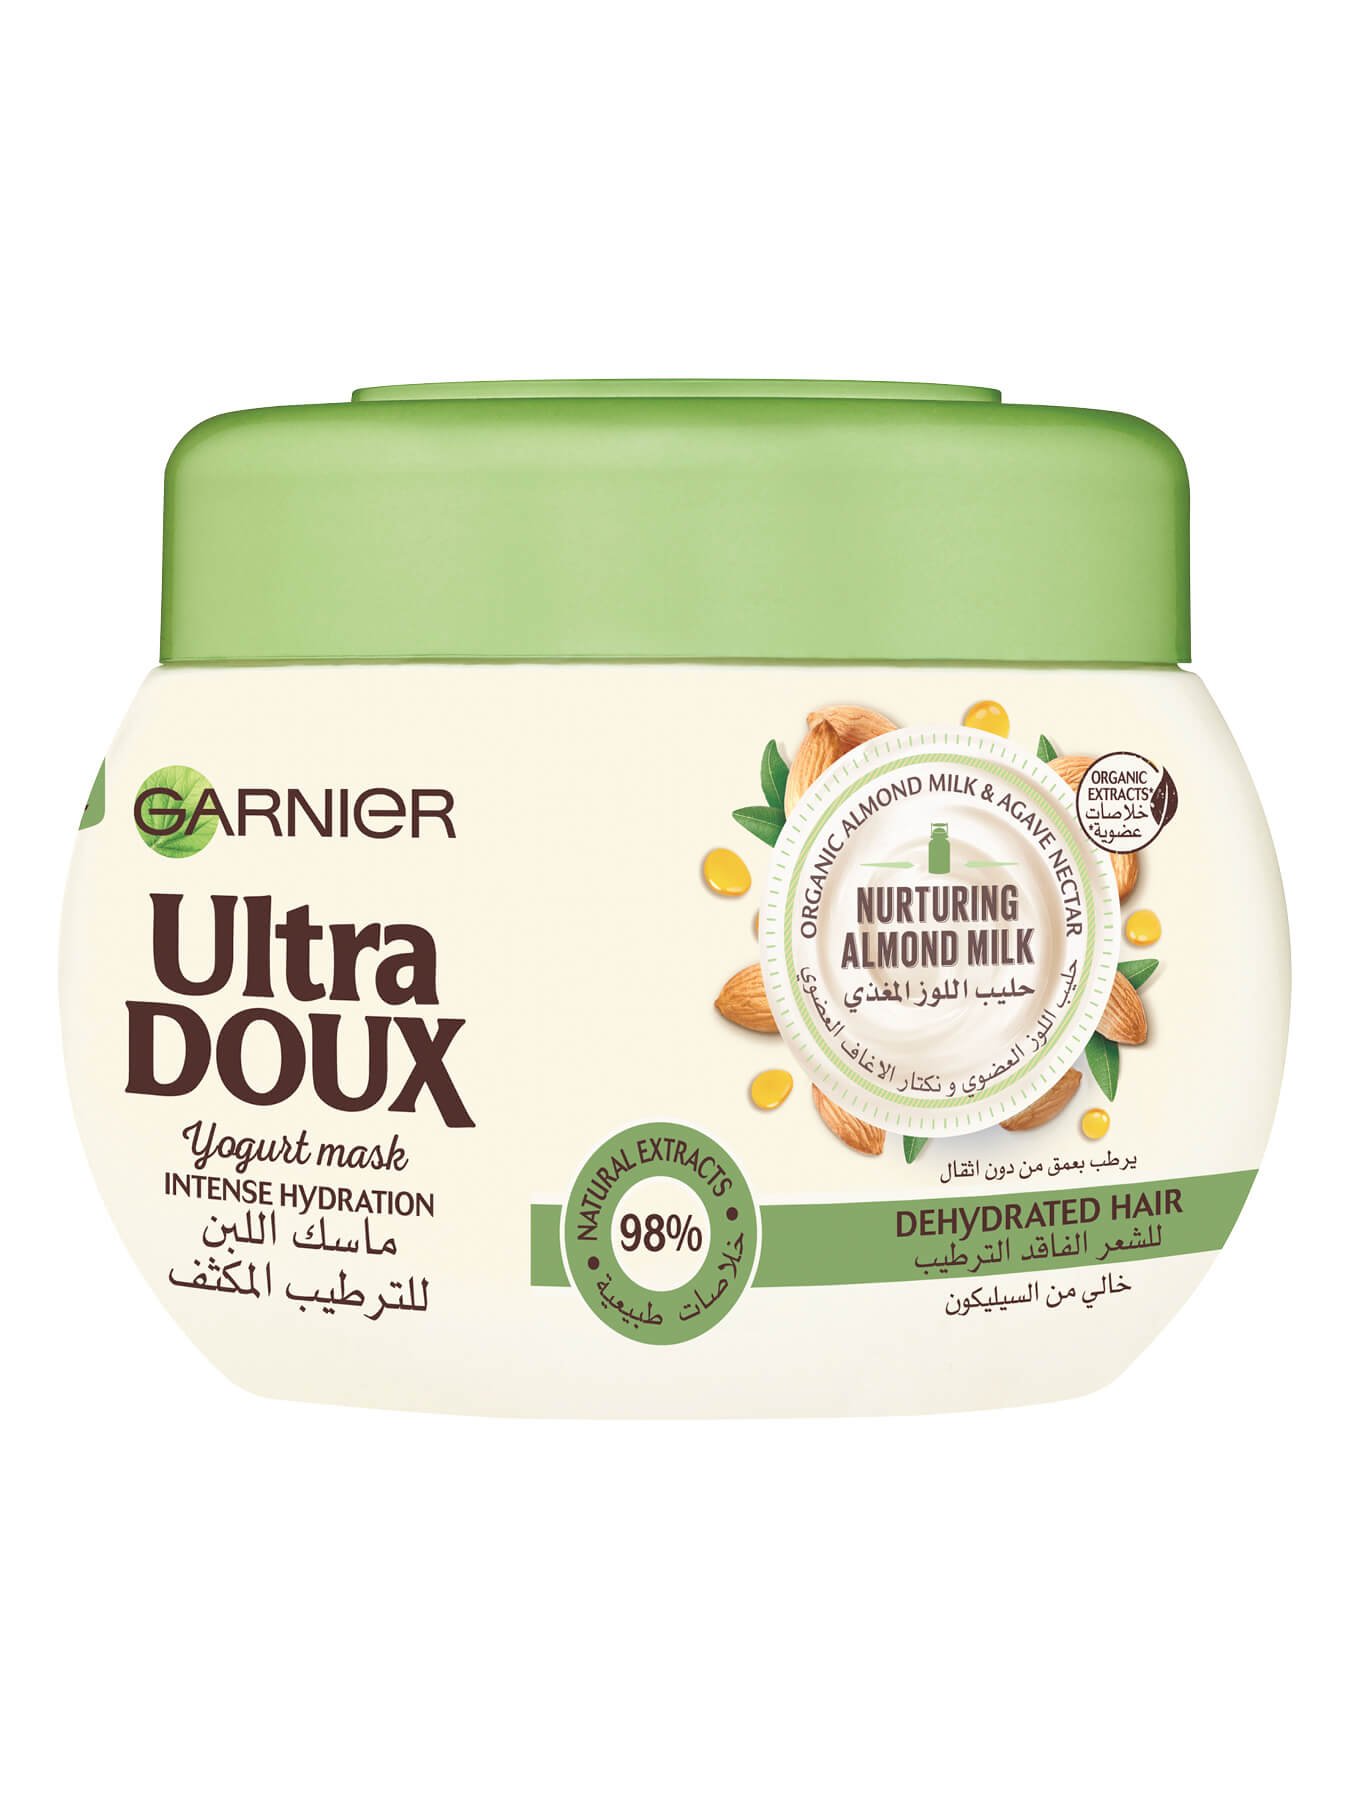 Garnier Ultra Doux Masque Revitalisant Intense Gingembre bio & Miel  d'Acacia